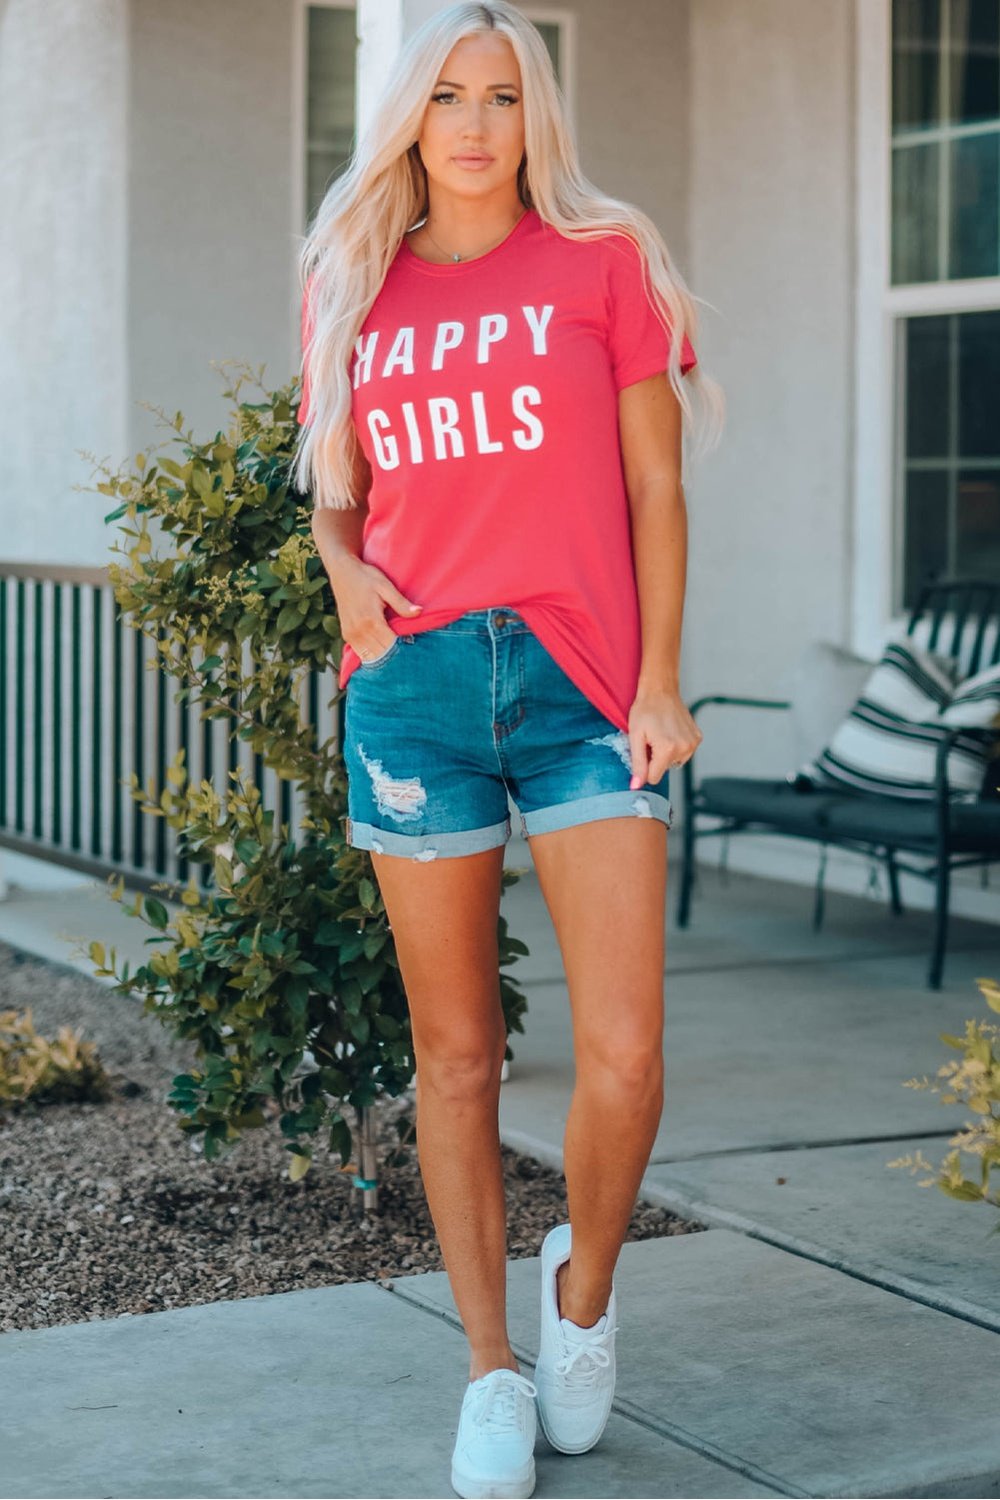 HAPPY GIRLS Short Sleeve Tee Shirt - T-Shirts - FITGGINS